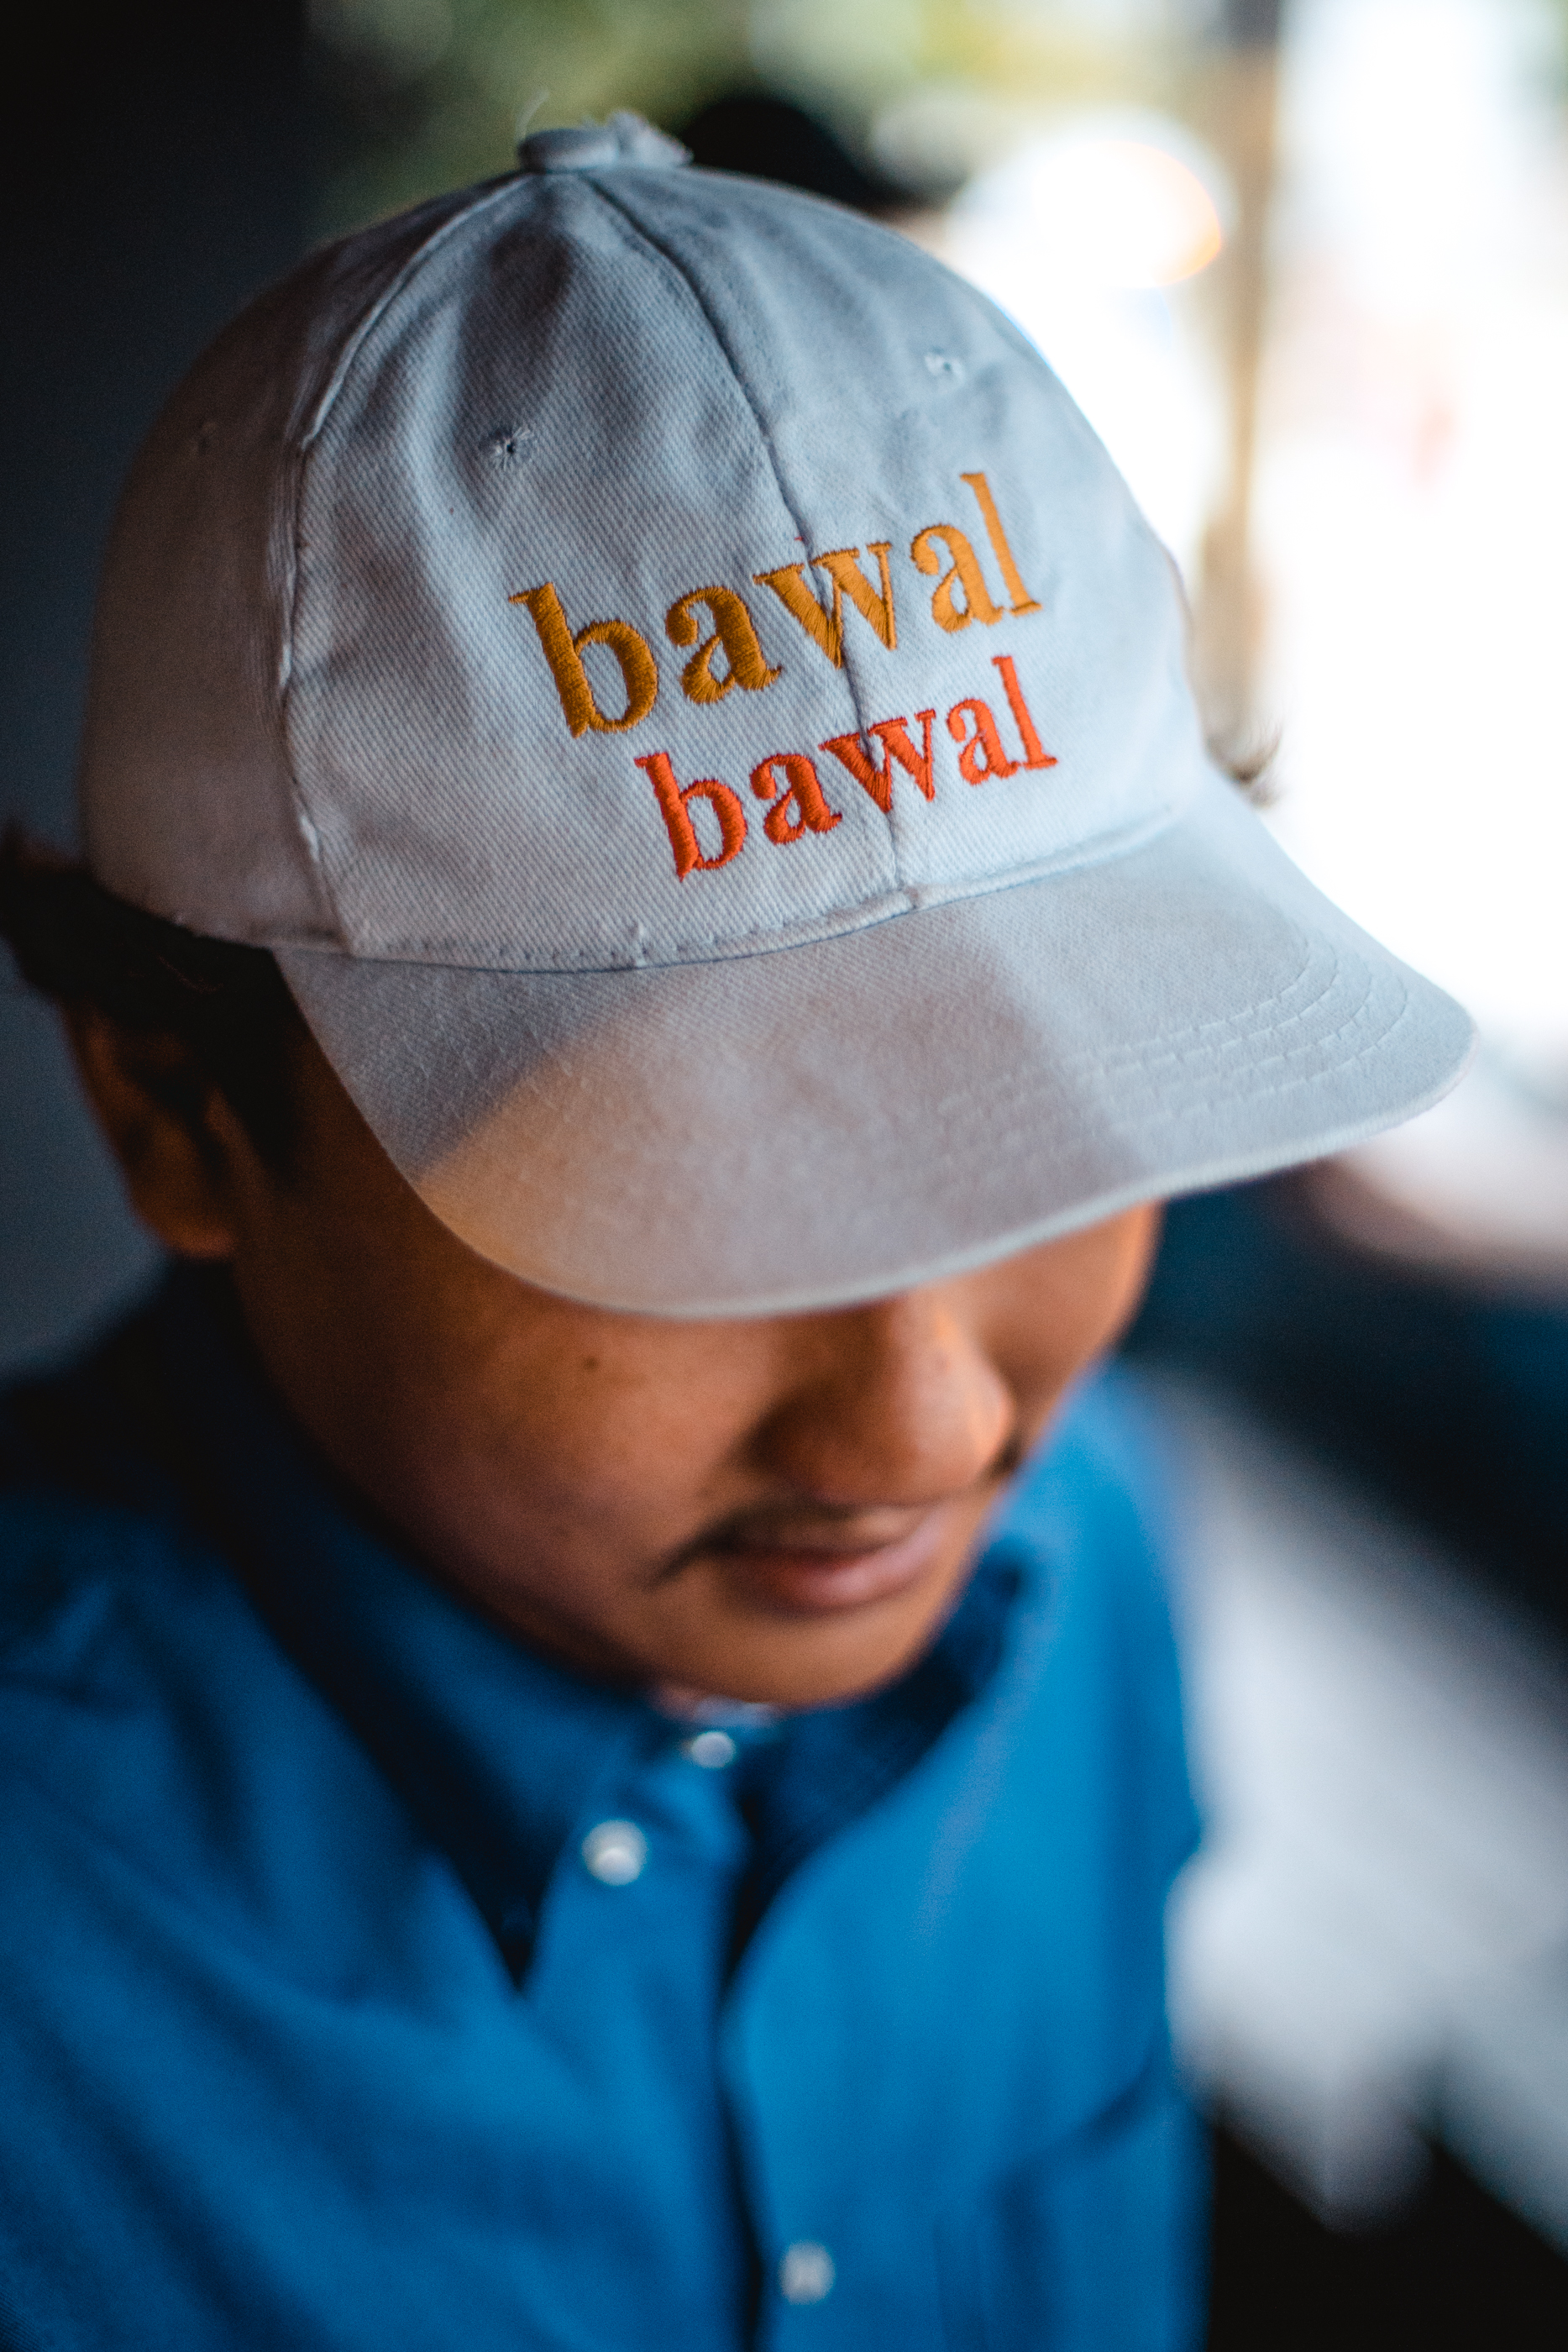  Bawal Clan for NeoCha. Manila, 2018. 